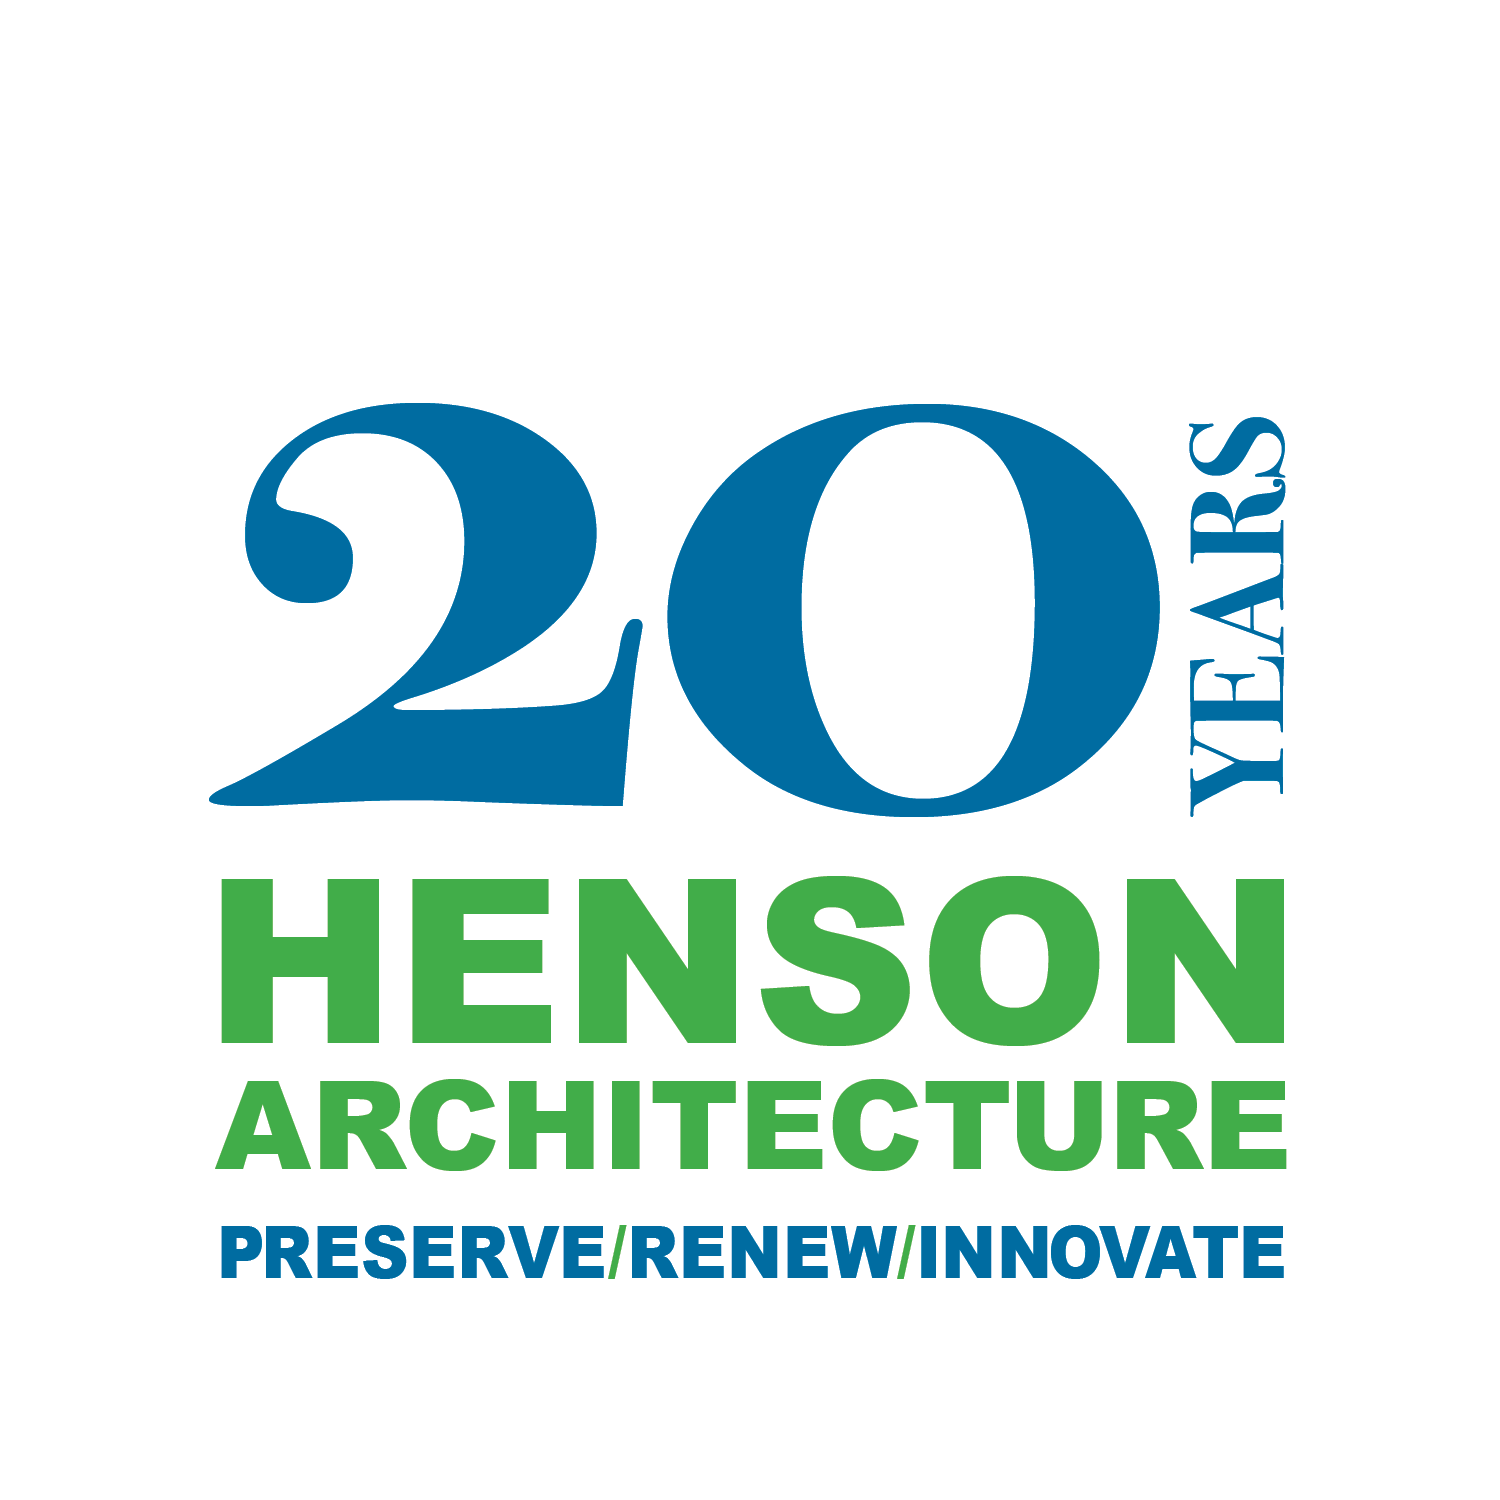 the logo for henry henson architecture preserver / re / innovate